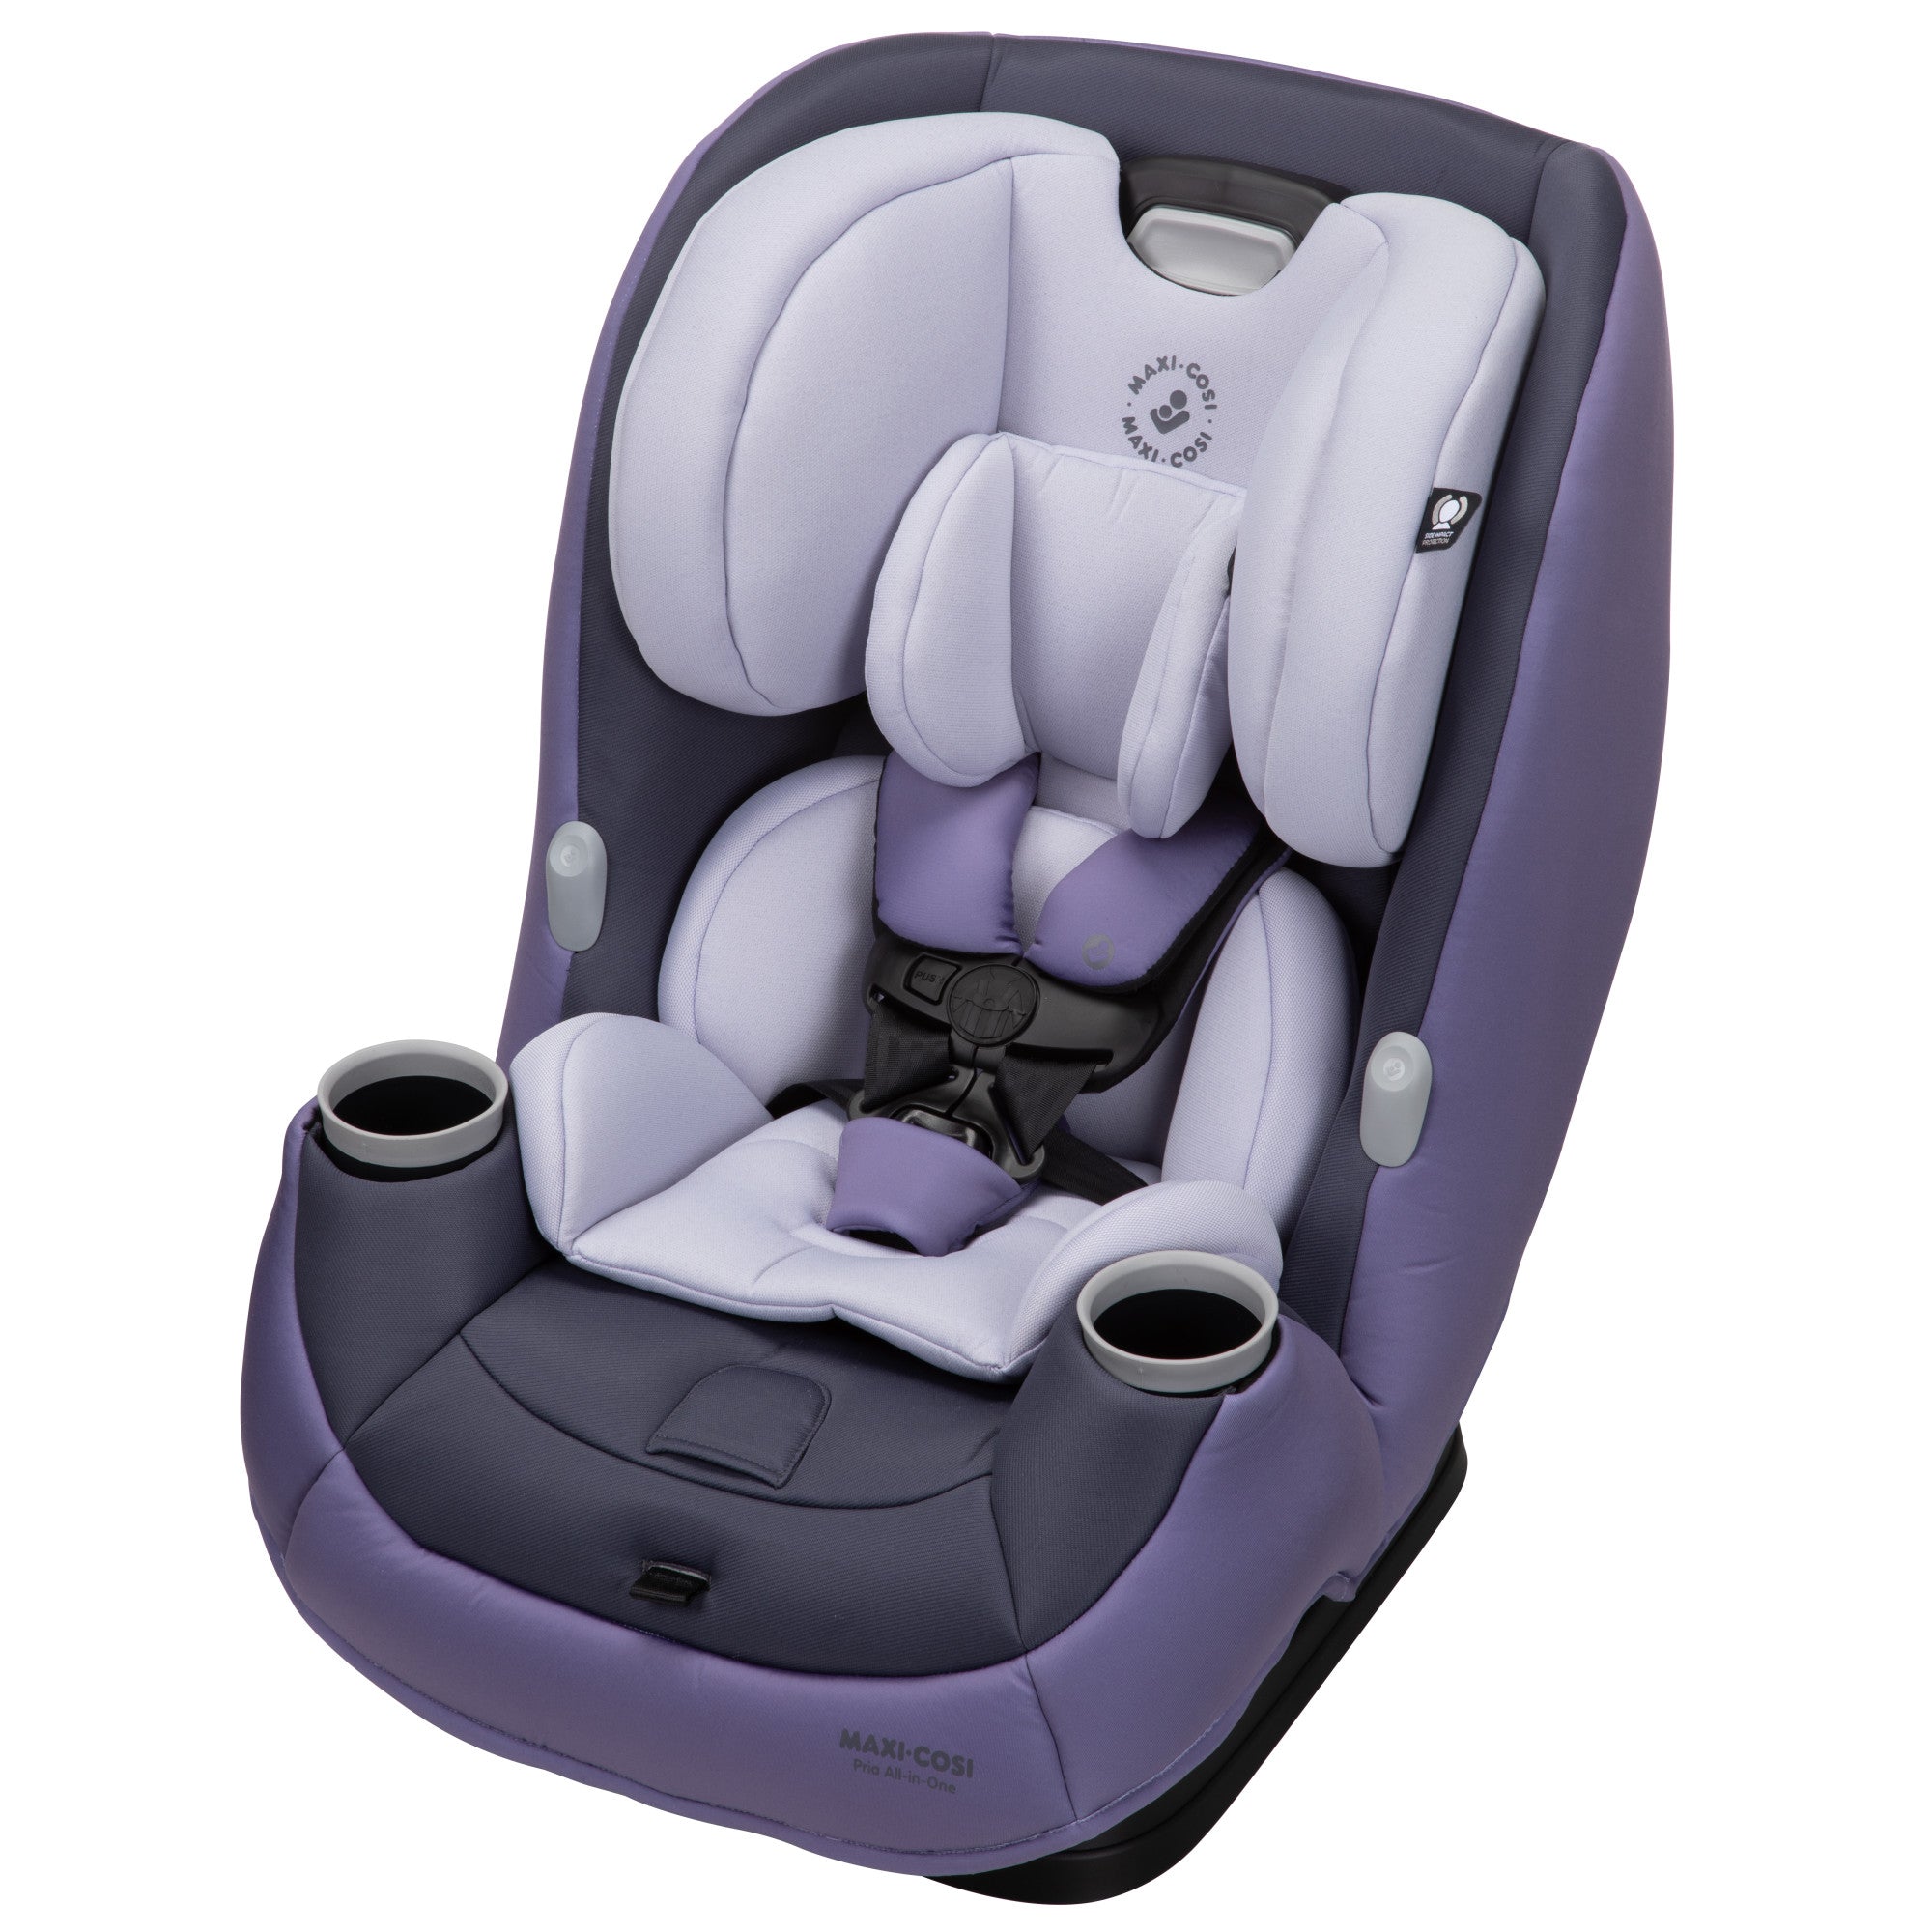 Maxi-Cosi Pria All-in-One Convertible Car Seat with PureCosi